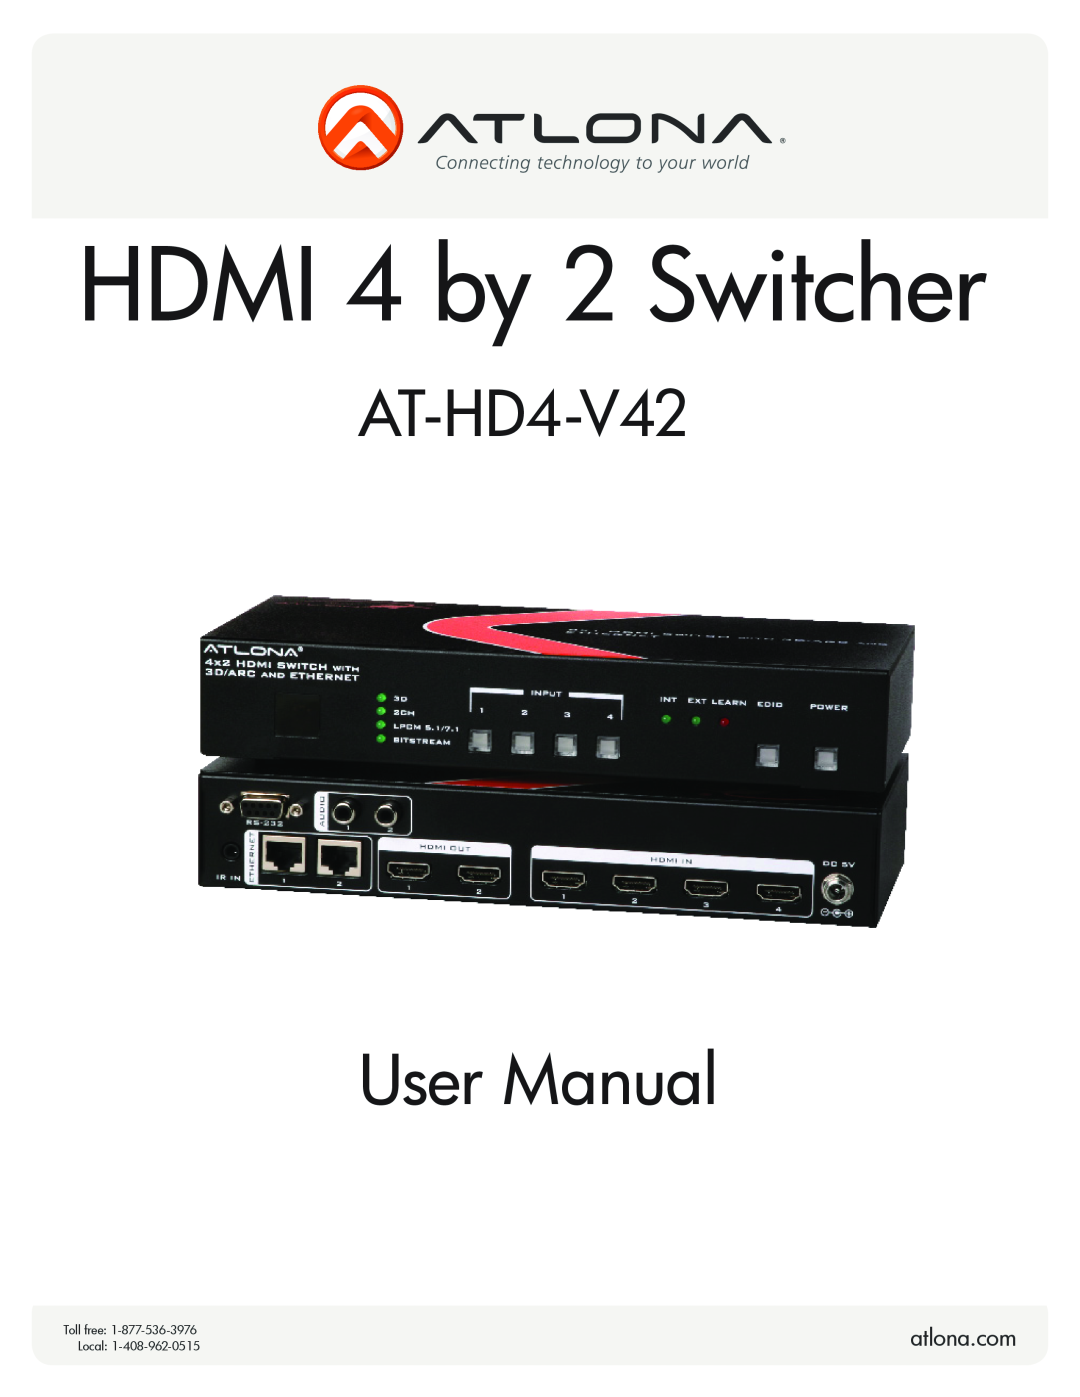 Atlona AT-HD4-V42 user manual HDMI 4 by 2 Switcher, User Manual, atlona.com, Toll free, Local 